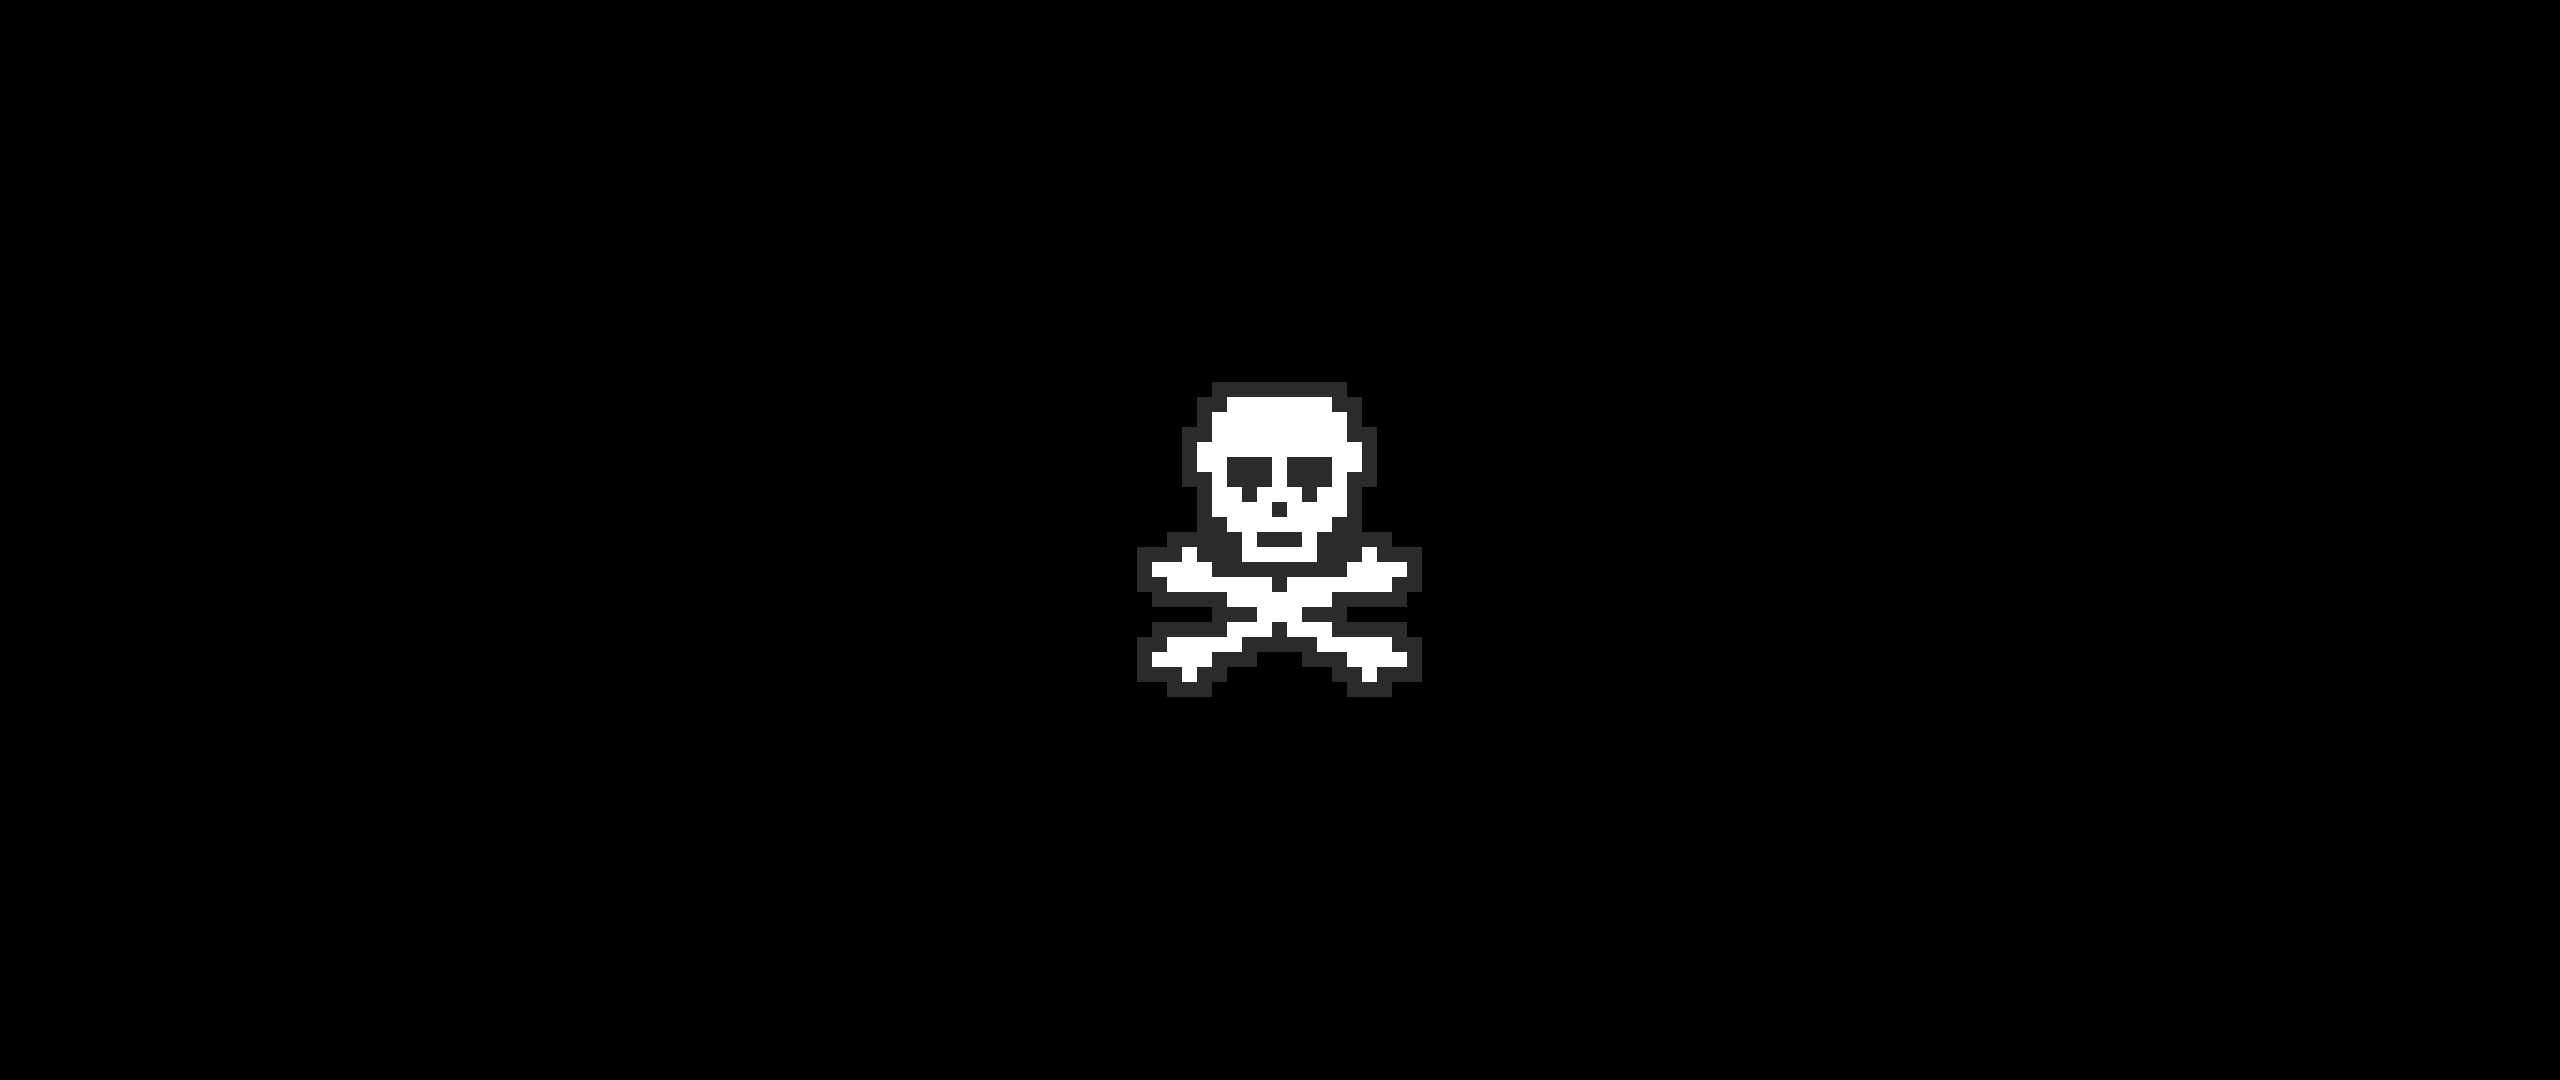 General 2560x1080 skull skull and bones 16-bit retro games black background simple background minimalism pixel art digital art artwork